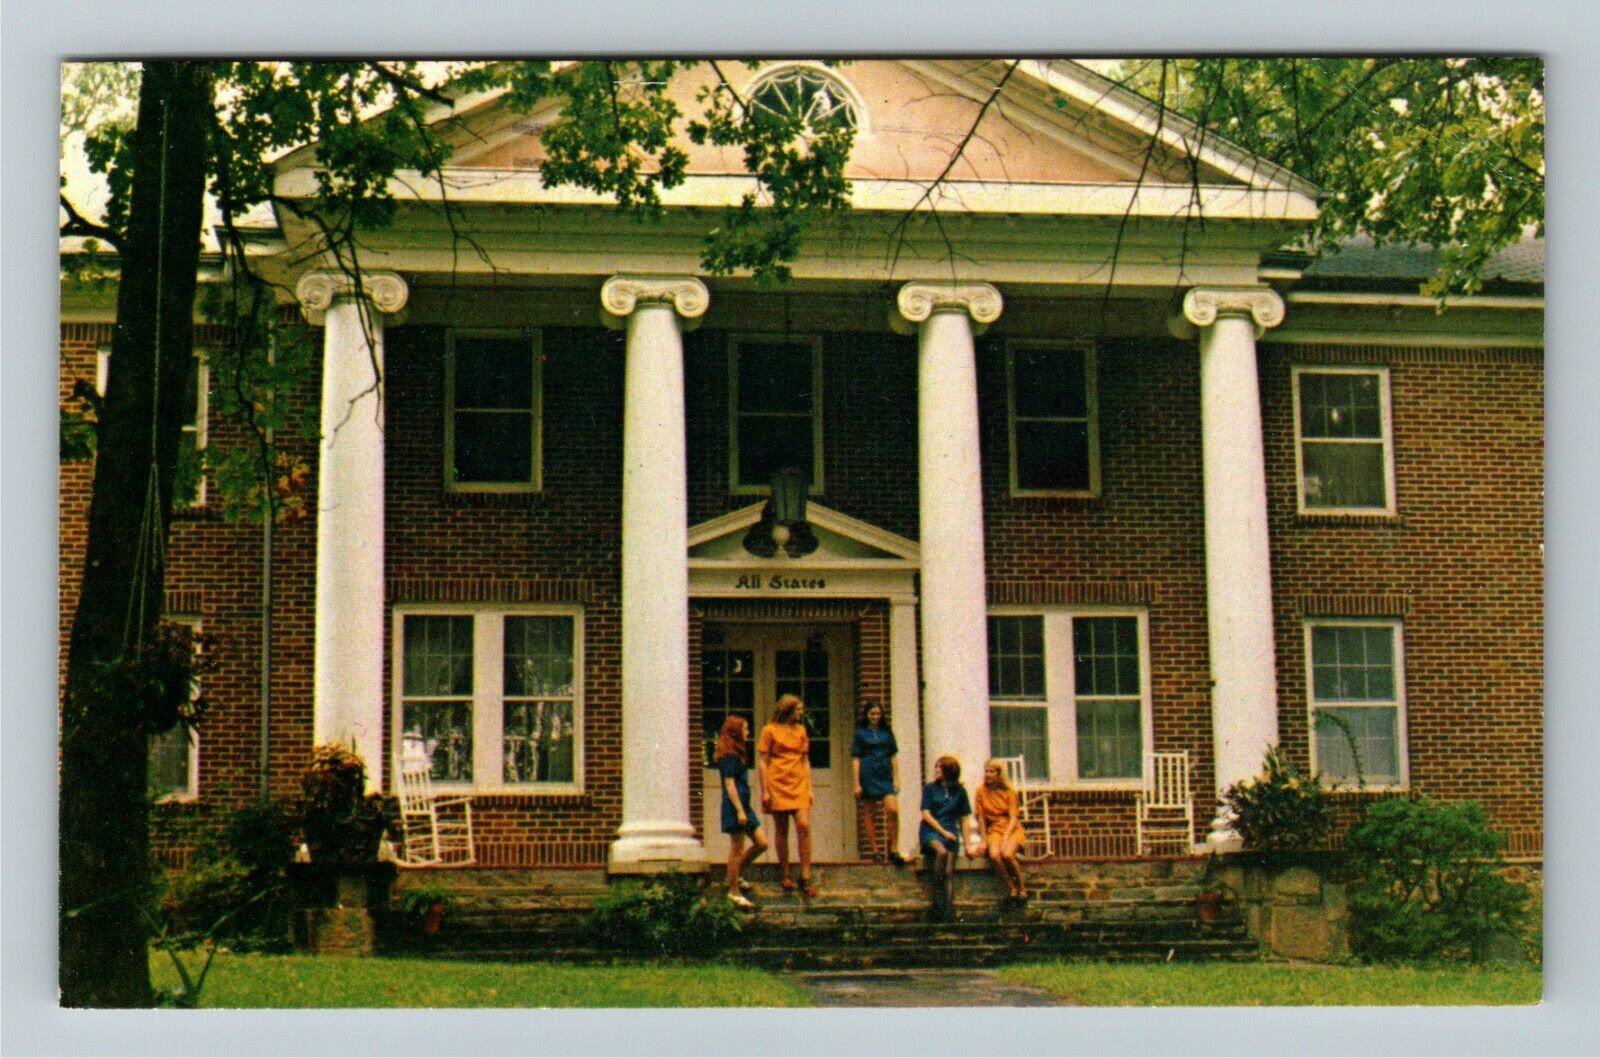 Tamassee SC-South Carolina, All States Dormitory, c1984 Vintage Postcard